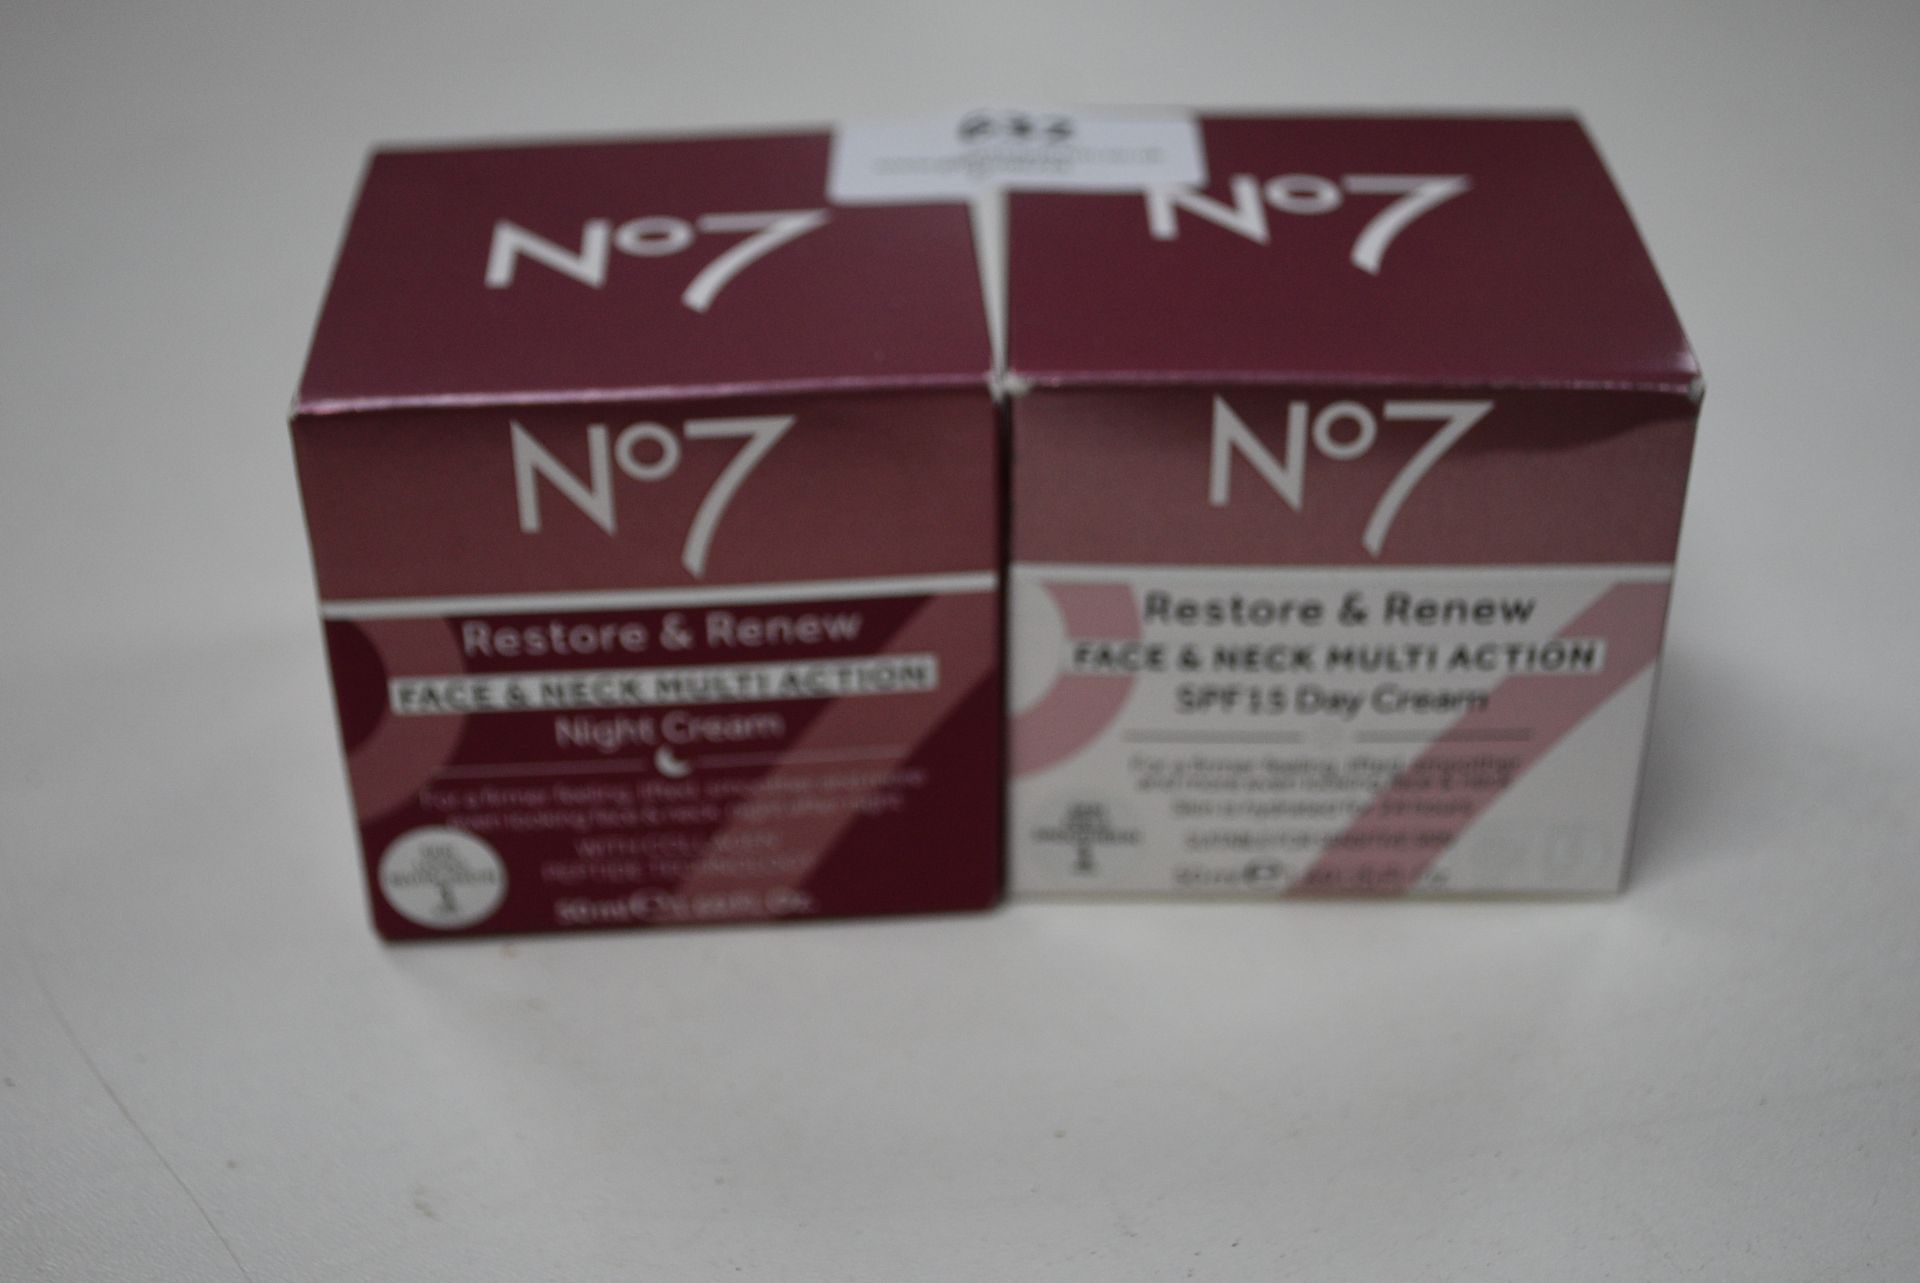 No. 07 Restore & Renew Night Cream 50ml and Day Cream 50ml